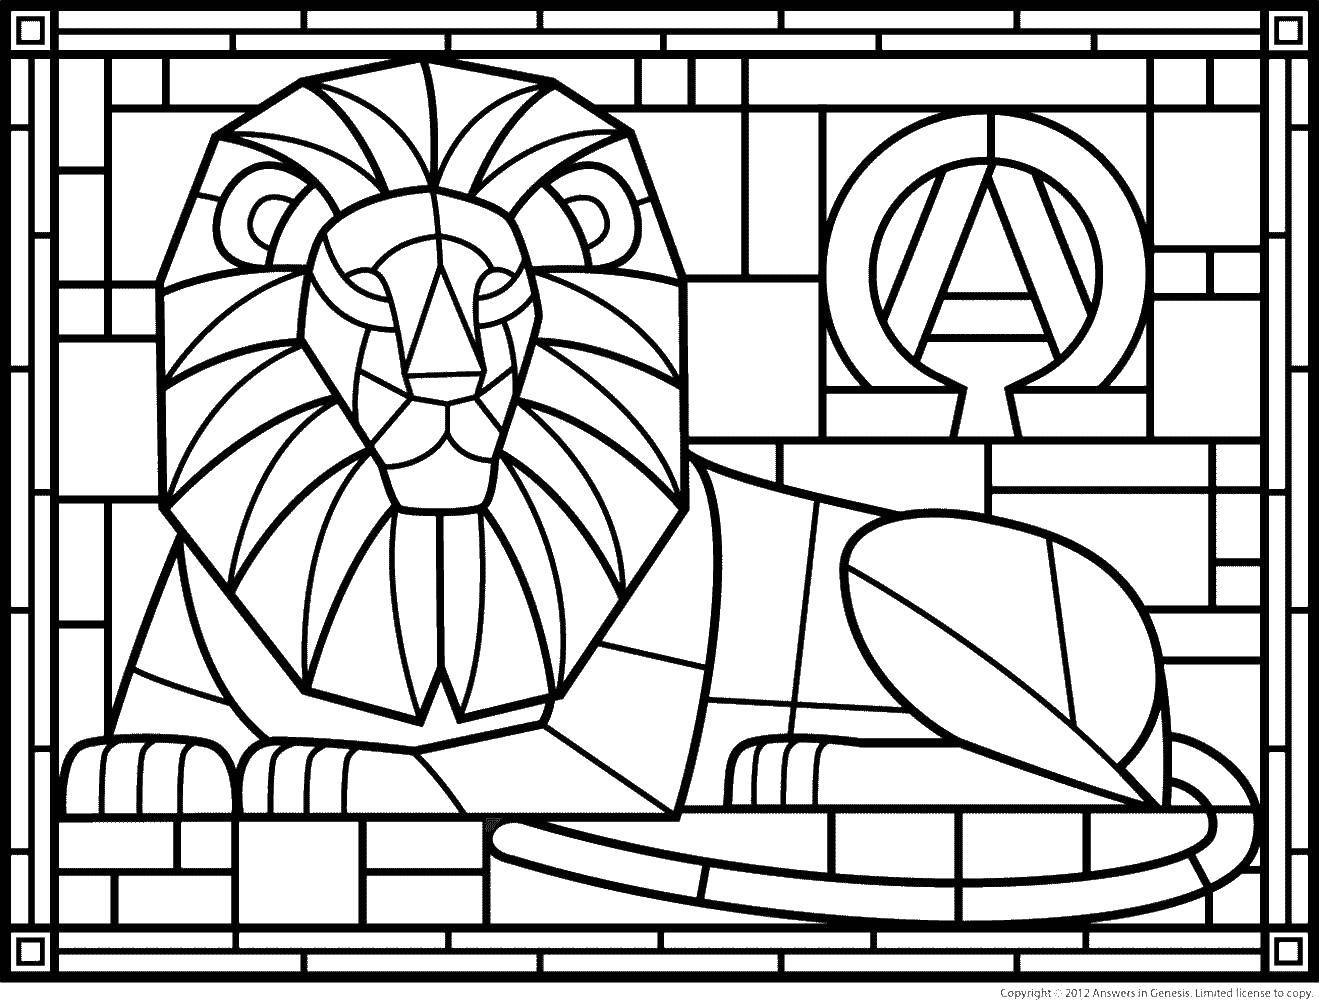 Mosaic lion